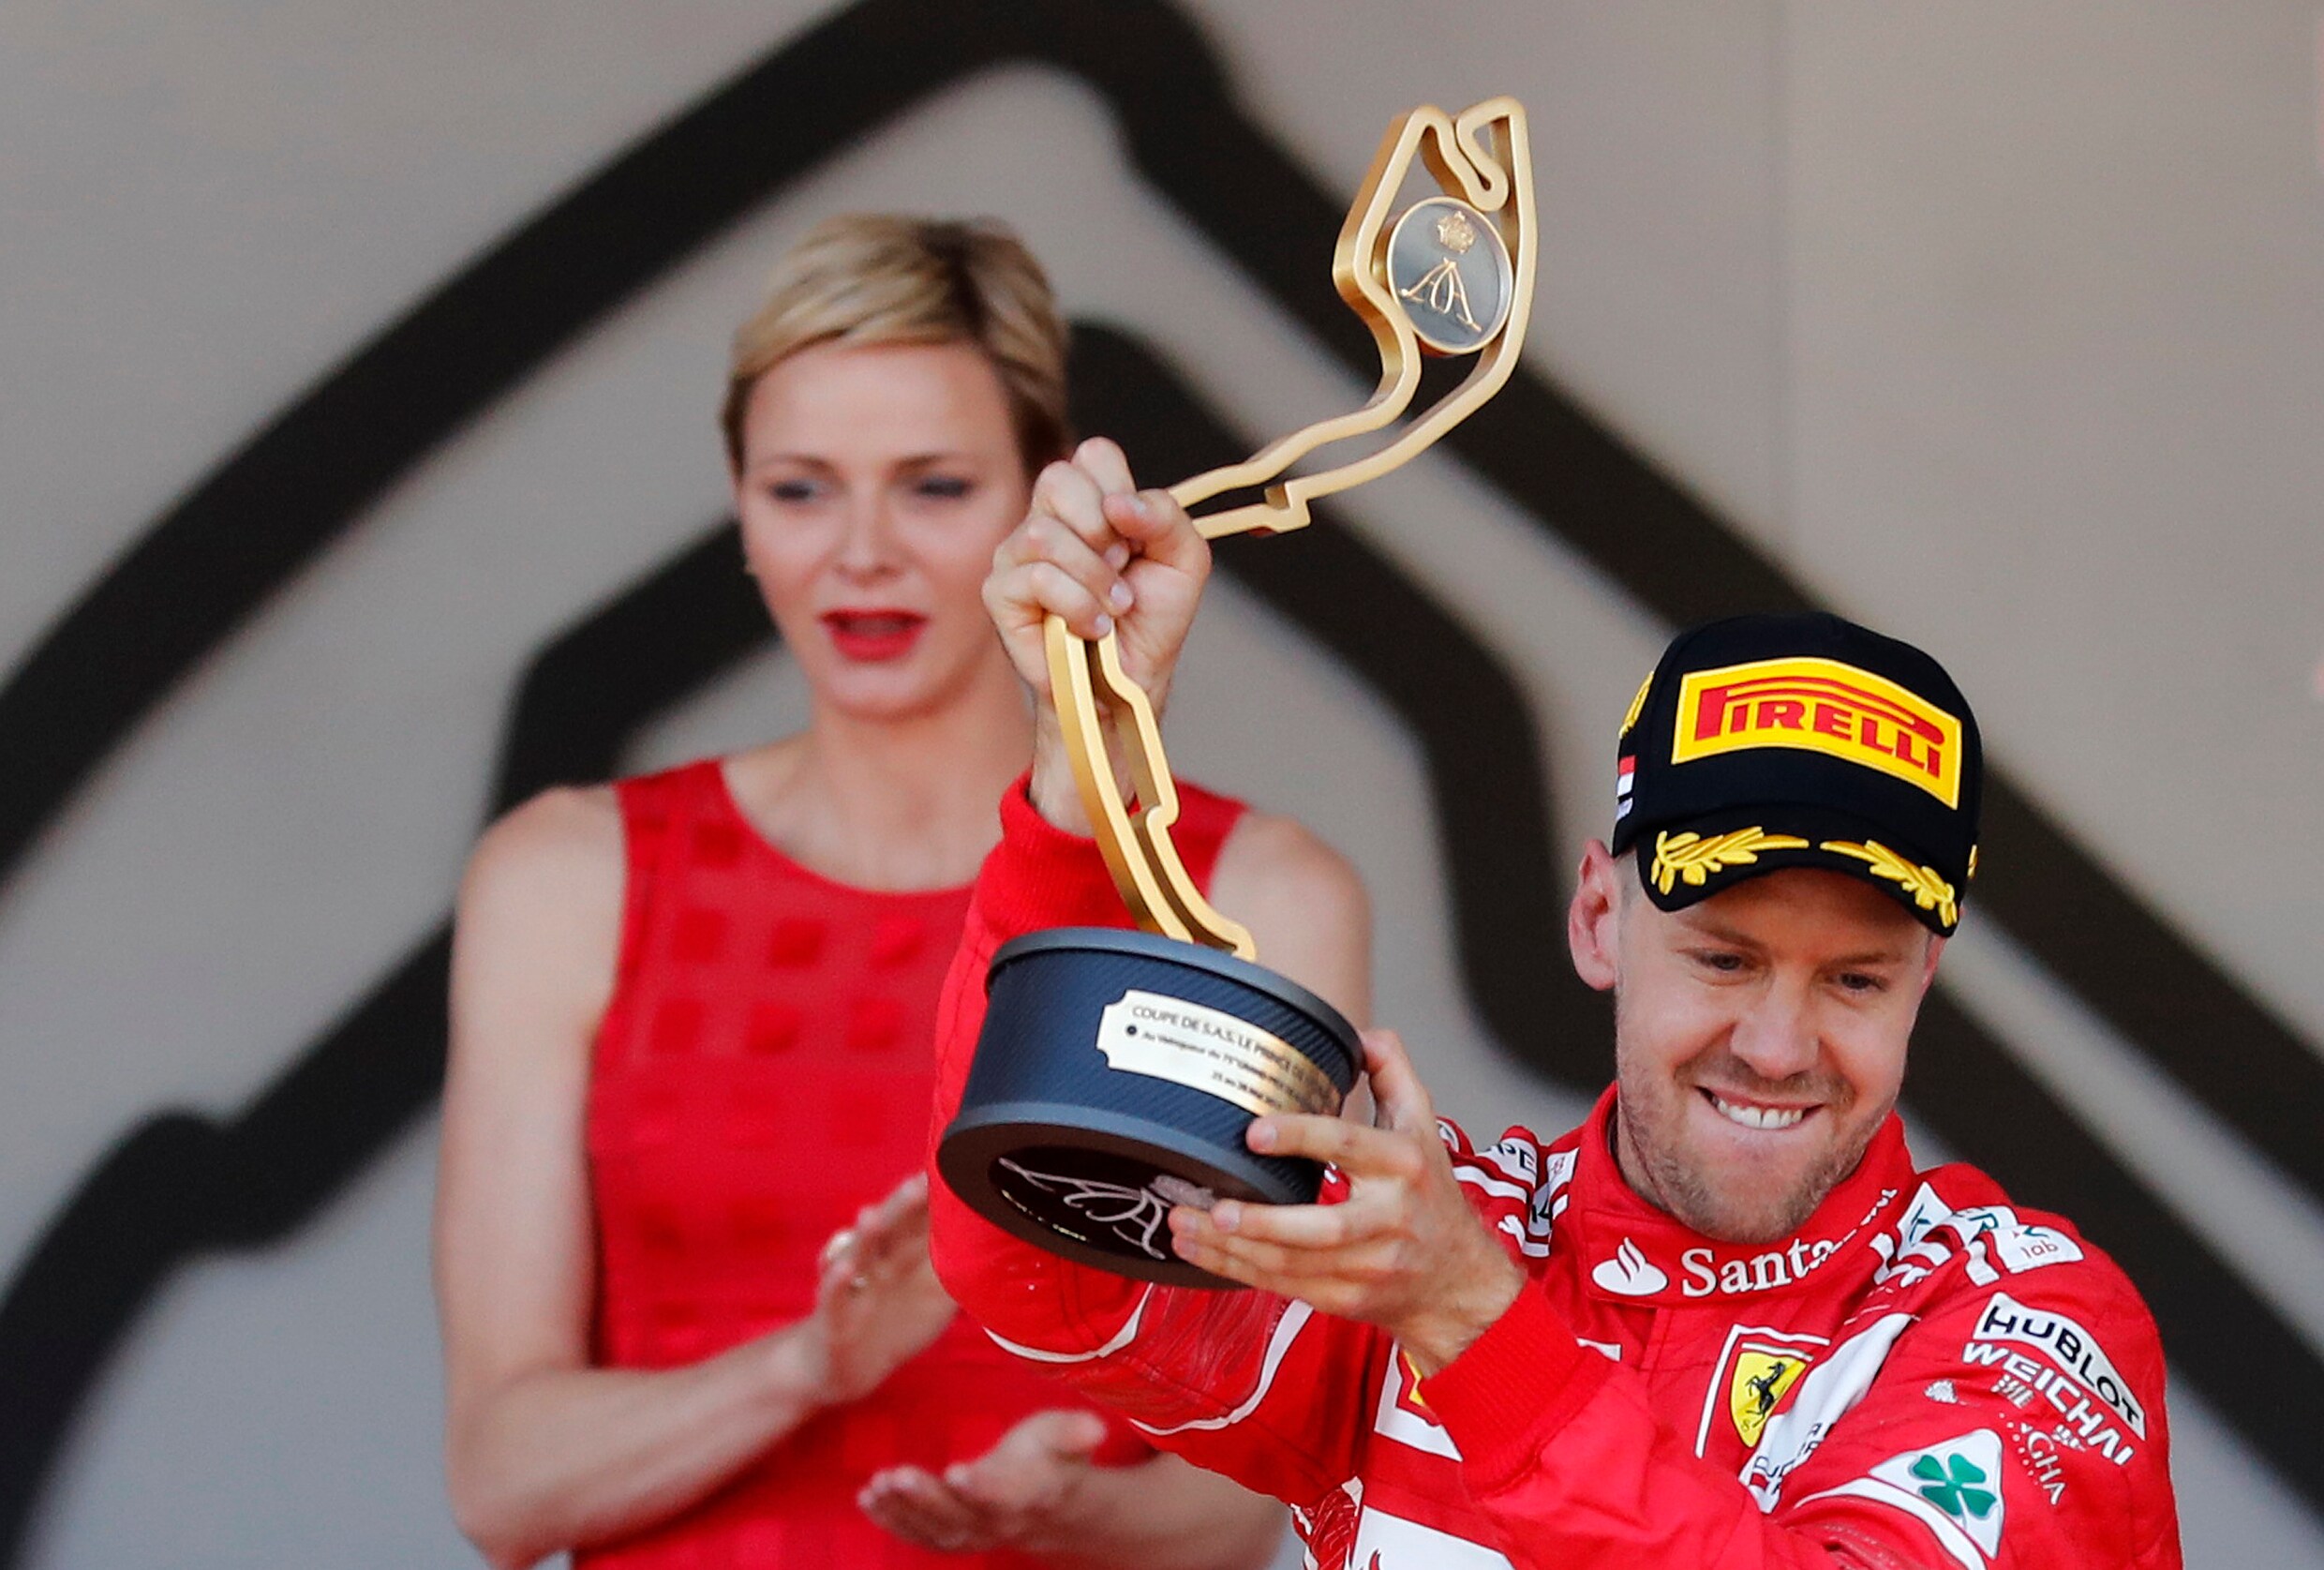 Ongenaakbare Vettel pakt zege, Vandoorne out na crash in slotfase